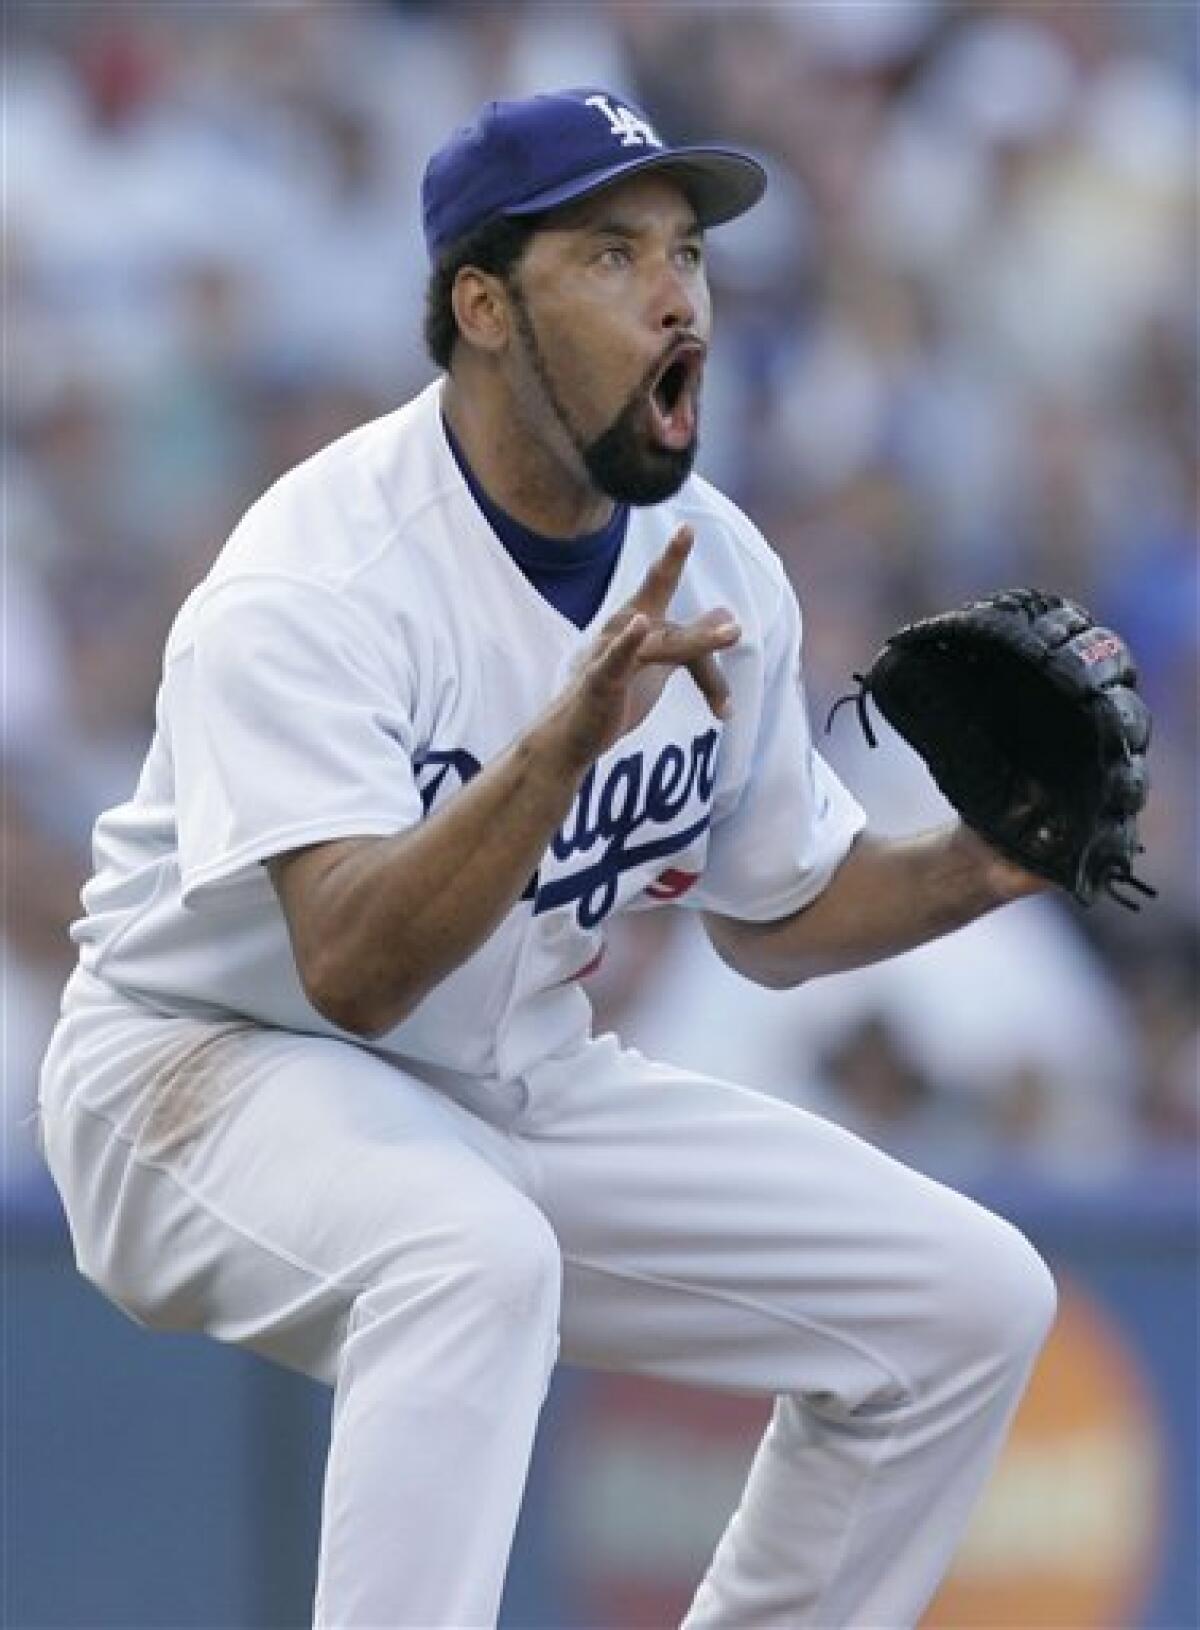 2004 Spring Training - Los Angeles Dodgers